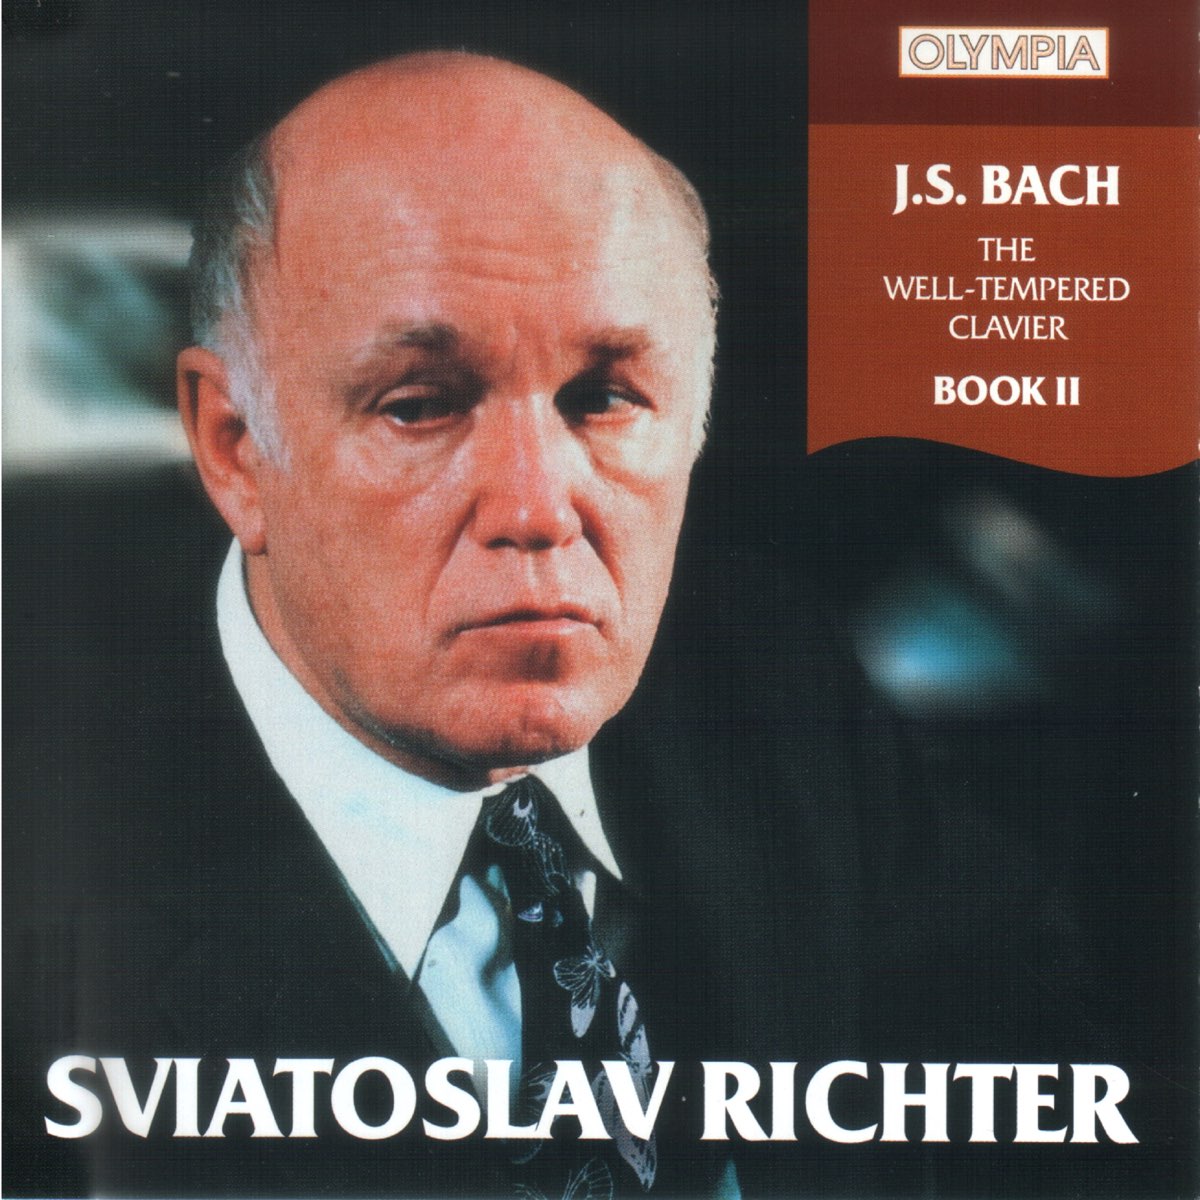 J.S. Bach: The Well-Tempered Clavier. Book II – Album par Sviatoslav  Richter – Apple Music